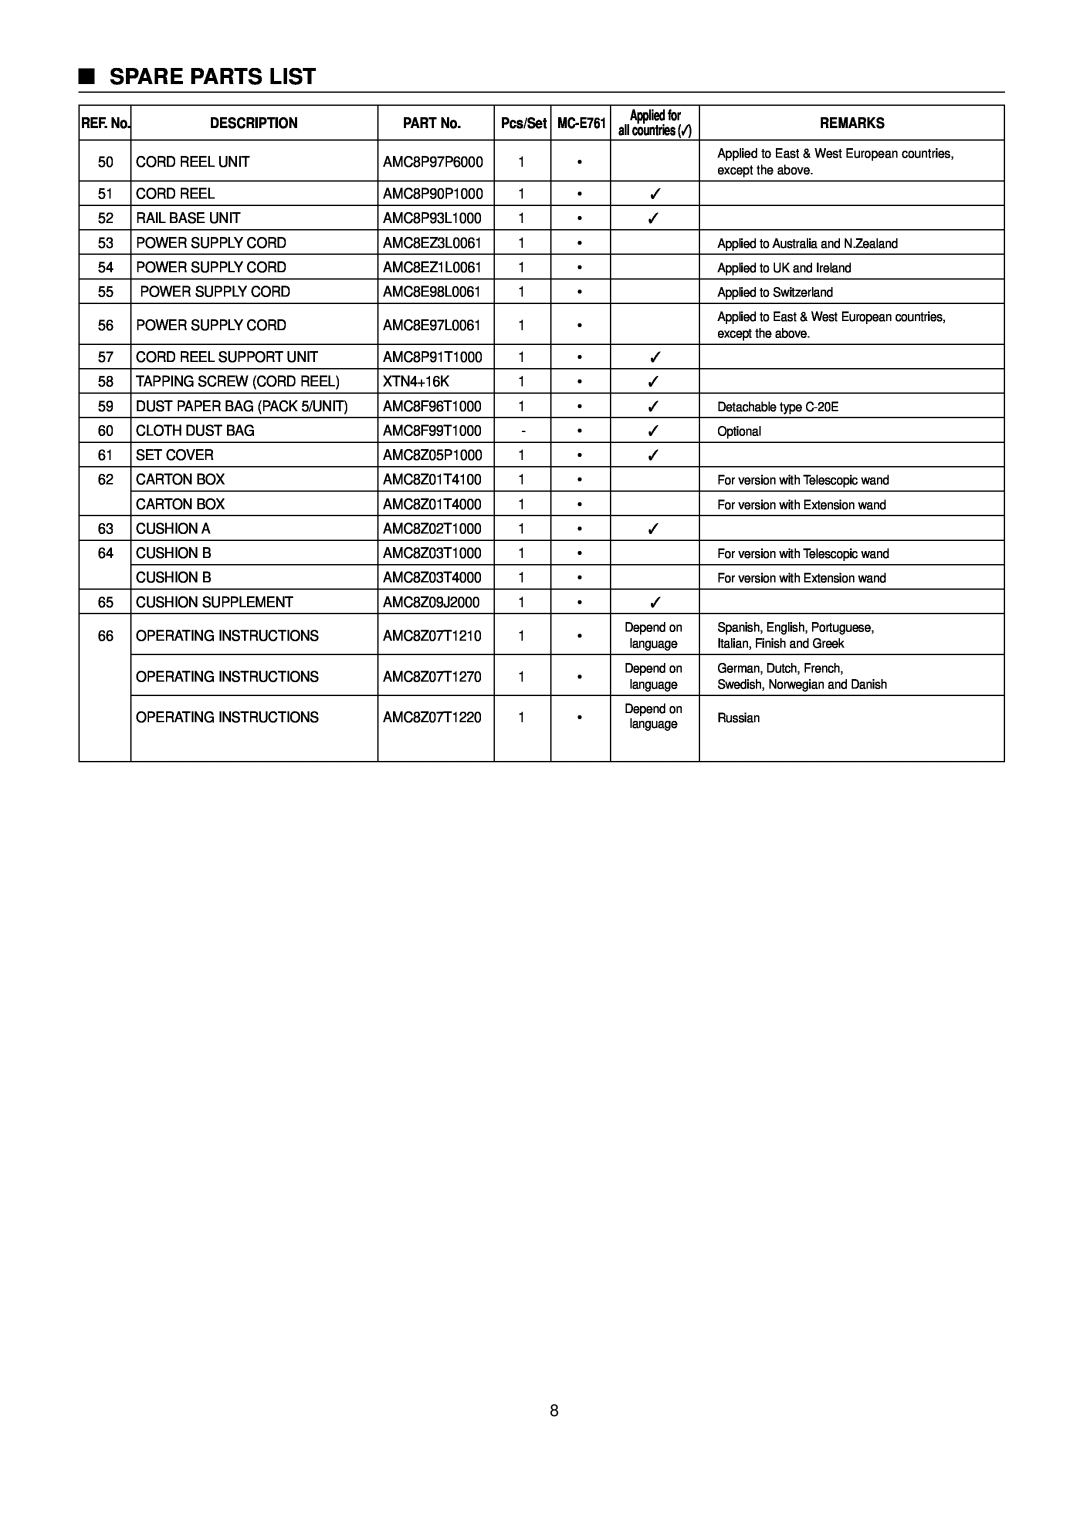 Panasonic MC-E761 specifications Spare Parts List, Cord Reel Unit 